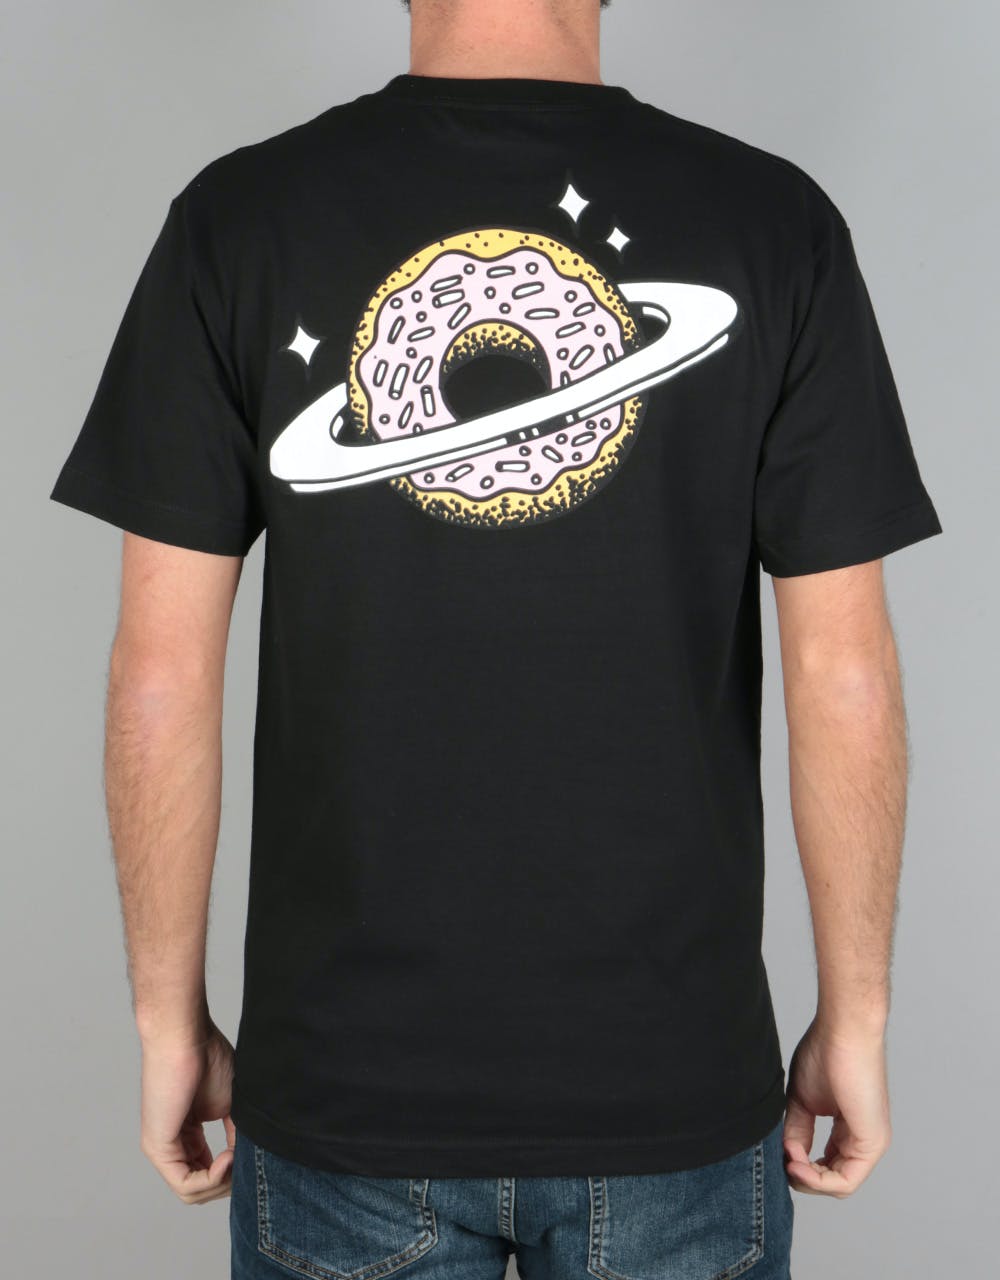 Skateboard Café Planet Donut T-Shirt - Black